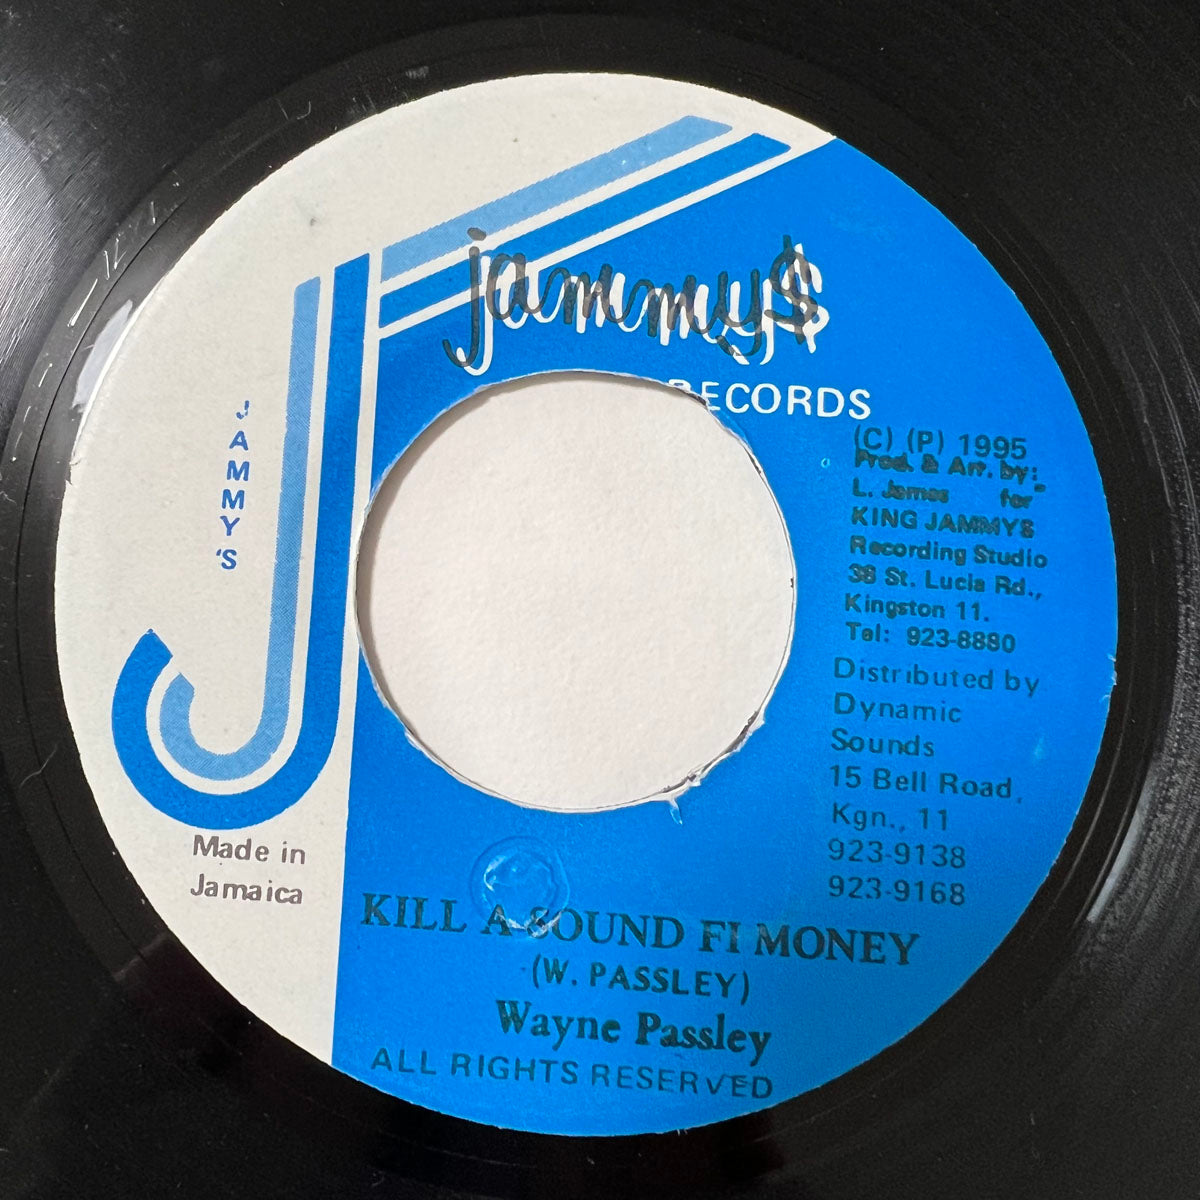 WAYNE PASSLEY / KILL A SOUND FI MONEY